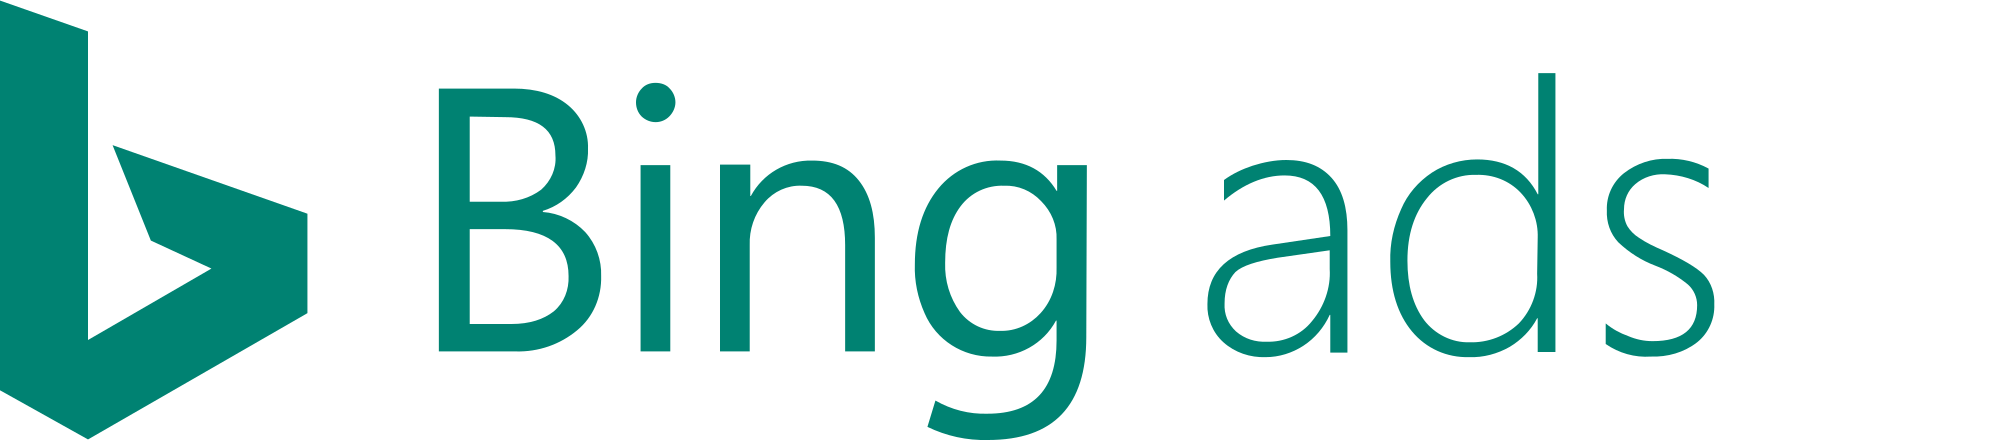 Bing Ads Logo - File:Bing Ads 2016 logo.svg - Wikimedia Commons